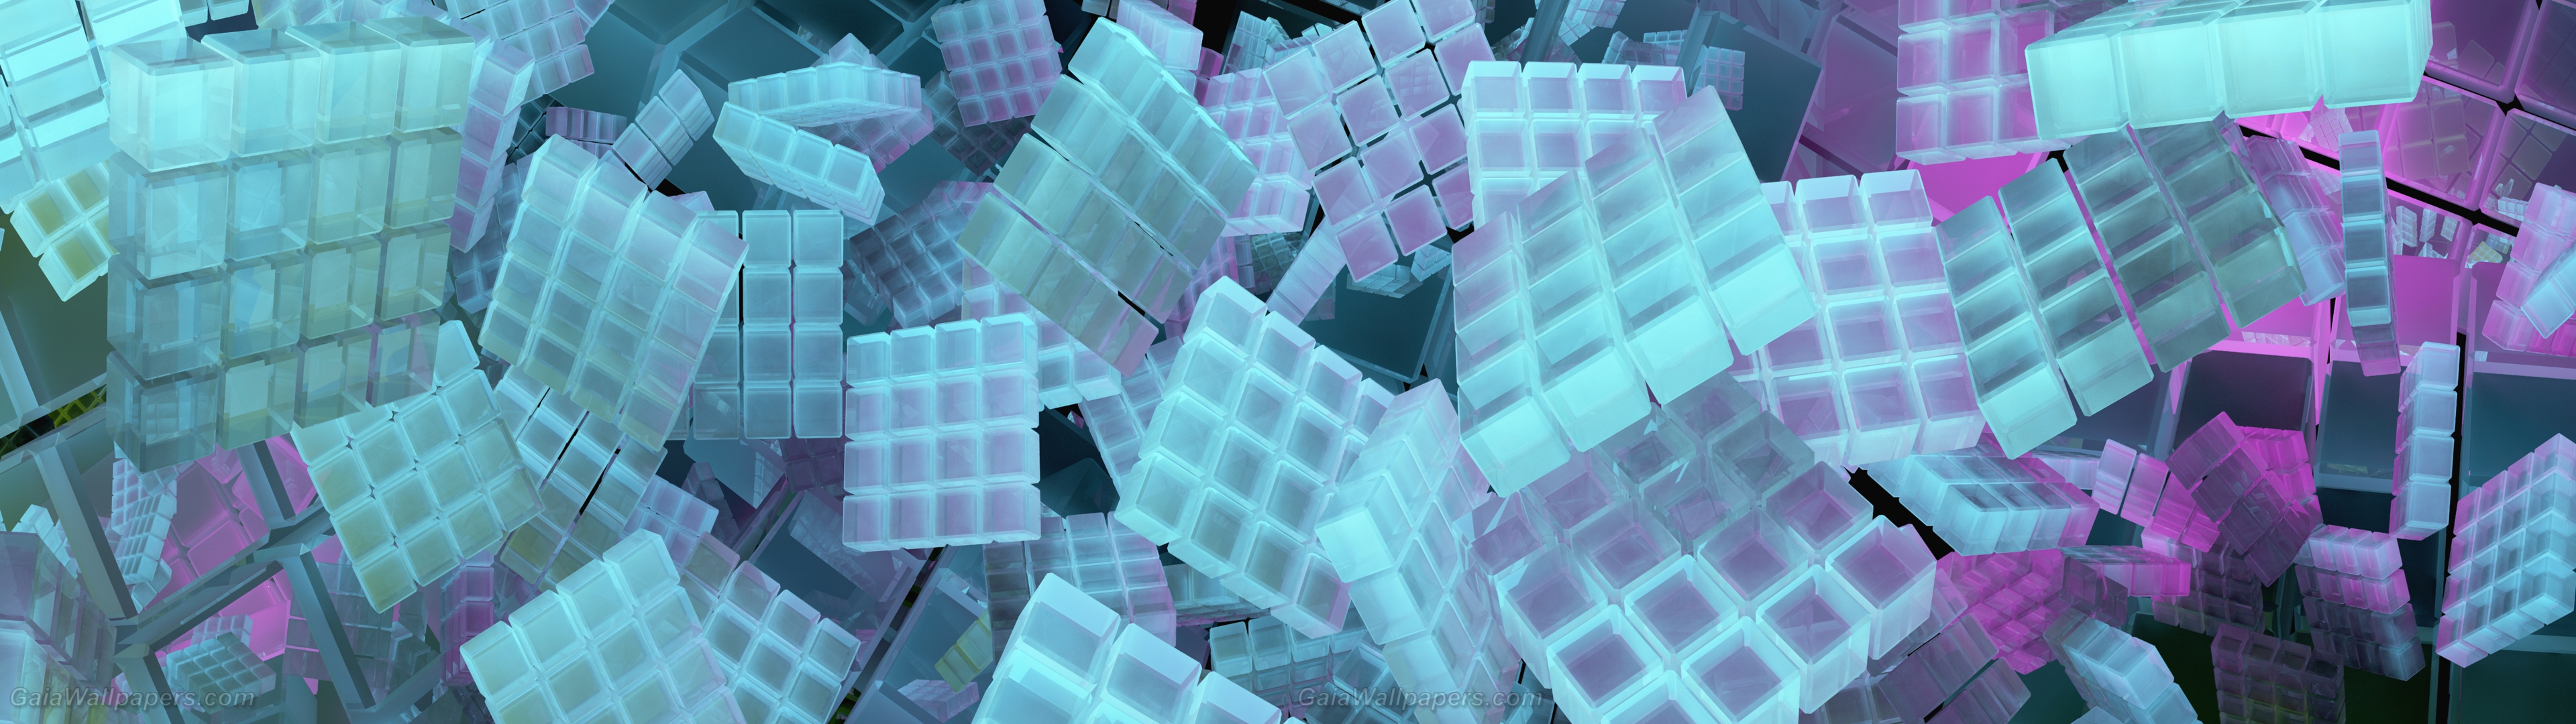 Strange 4x4 squares in the virtual - Free desktop wallpapers